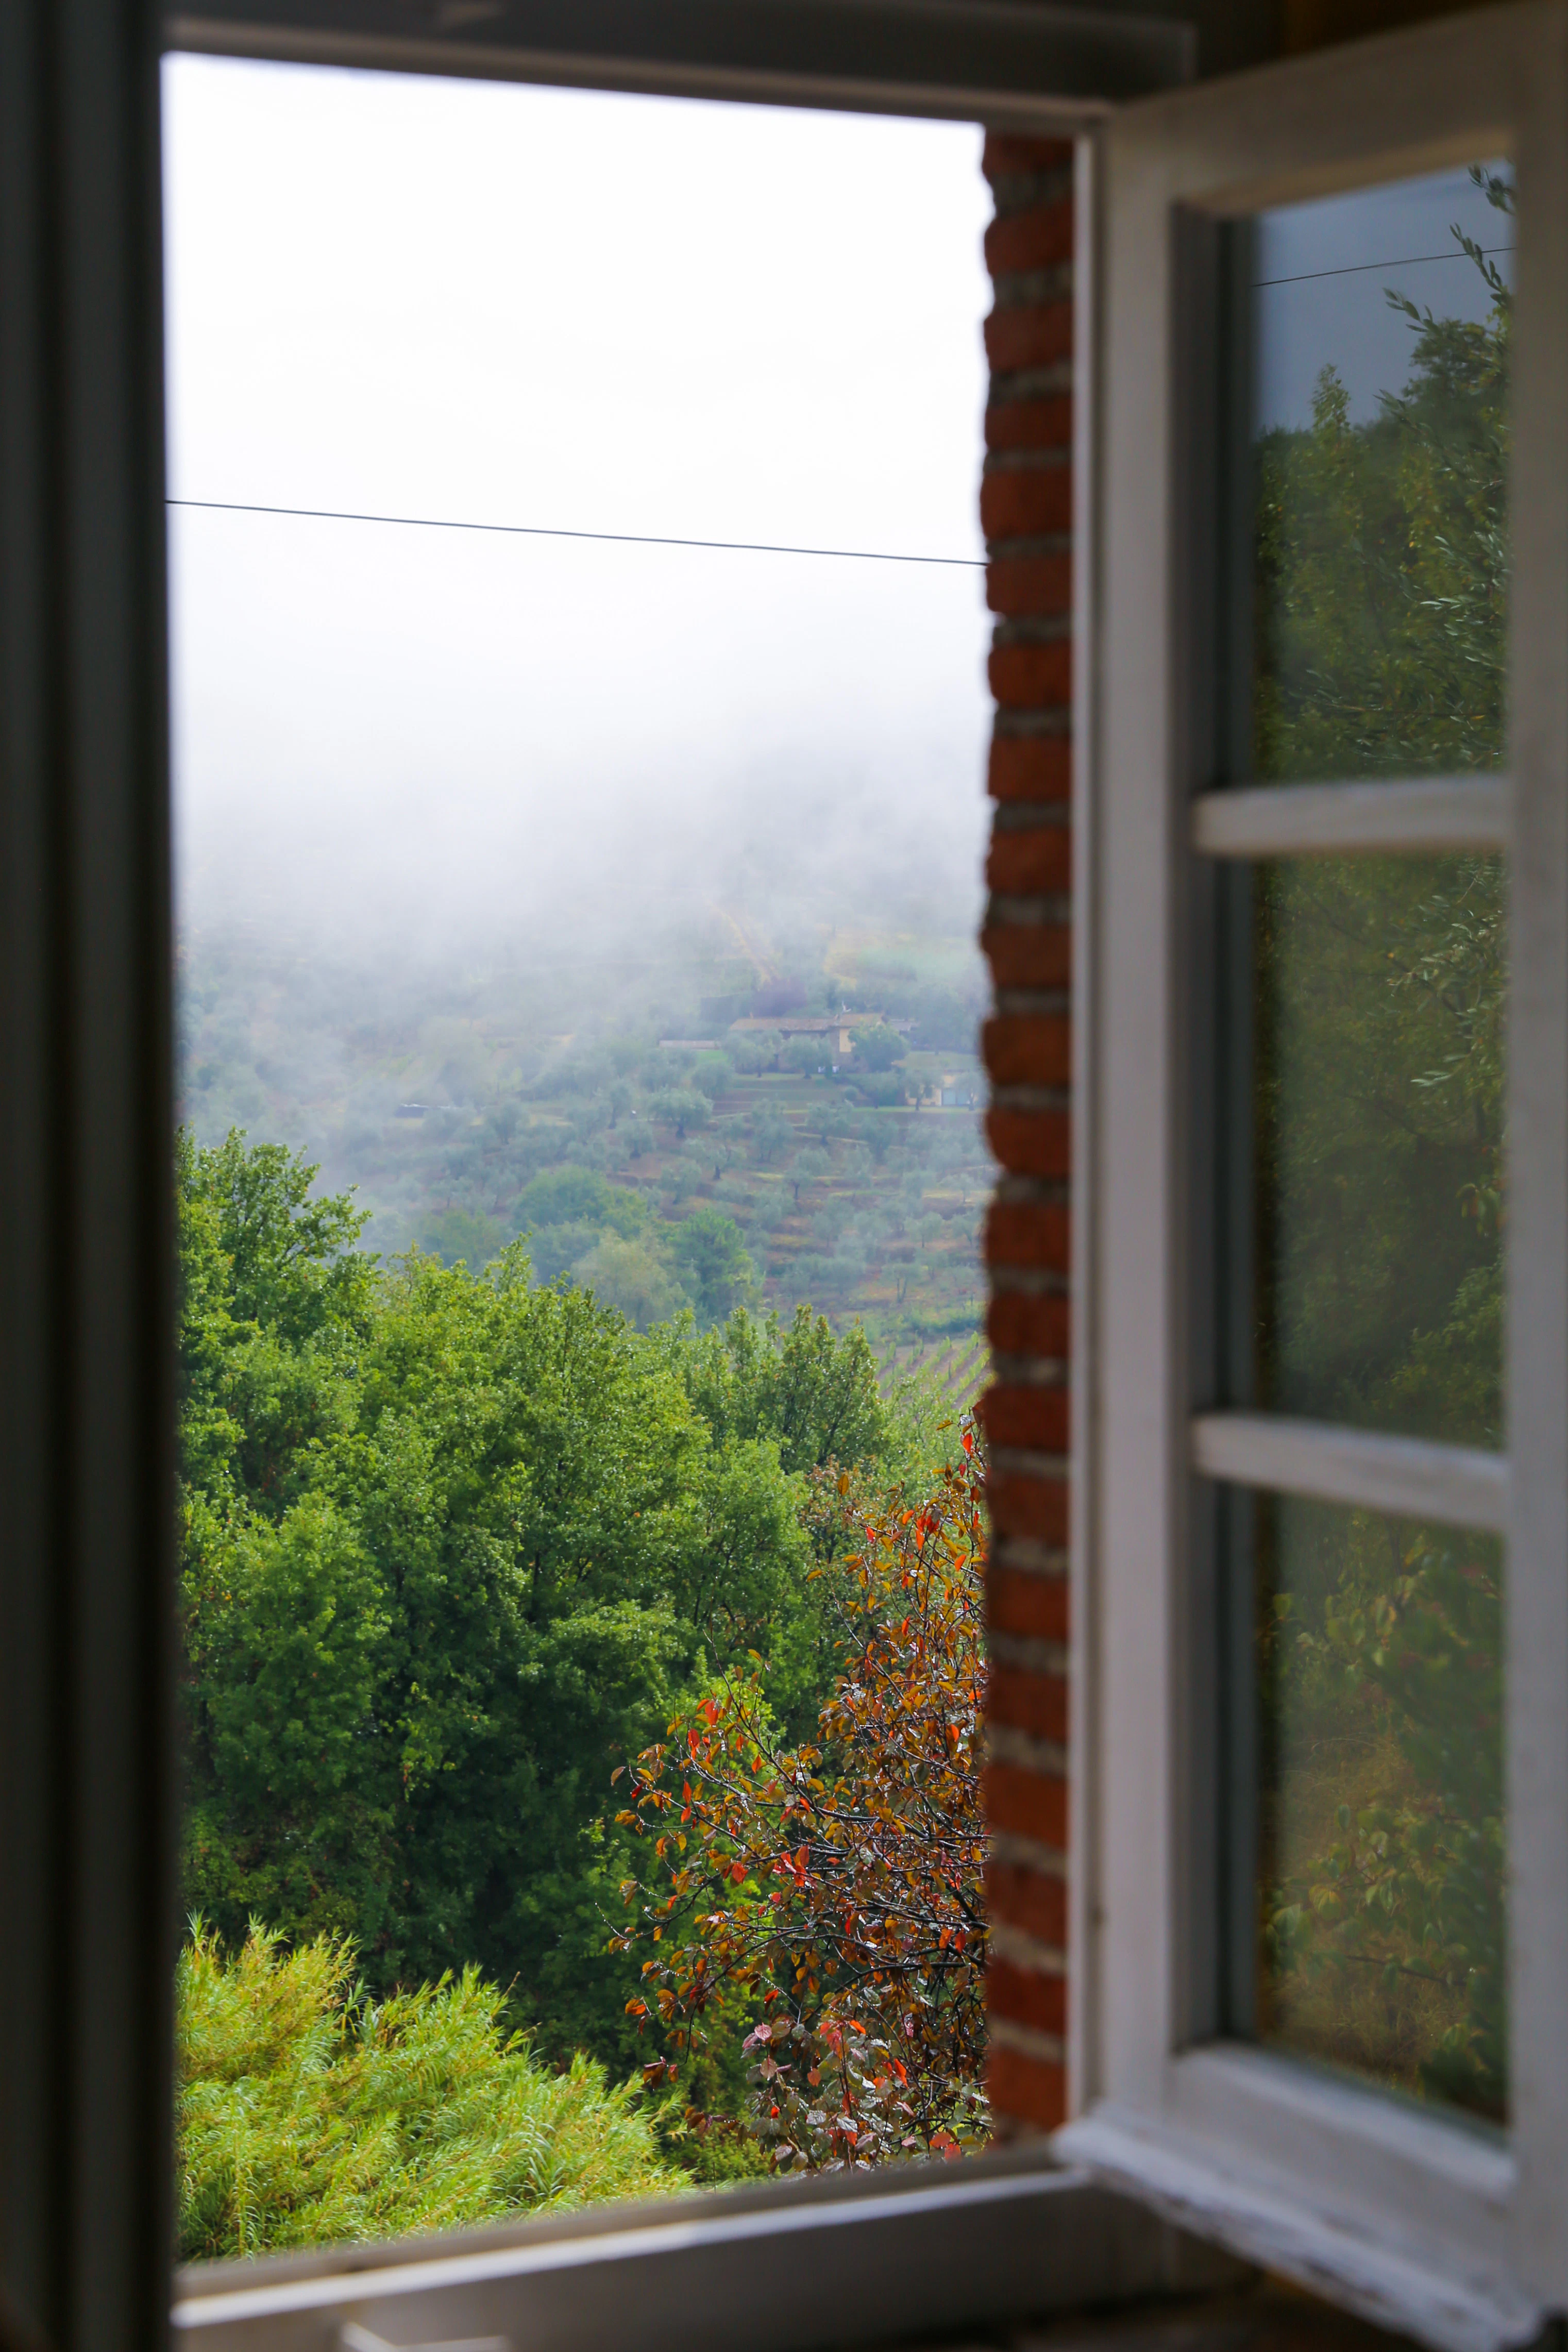 Foggy landscape through an open window.